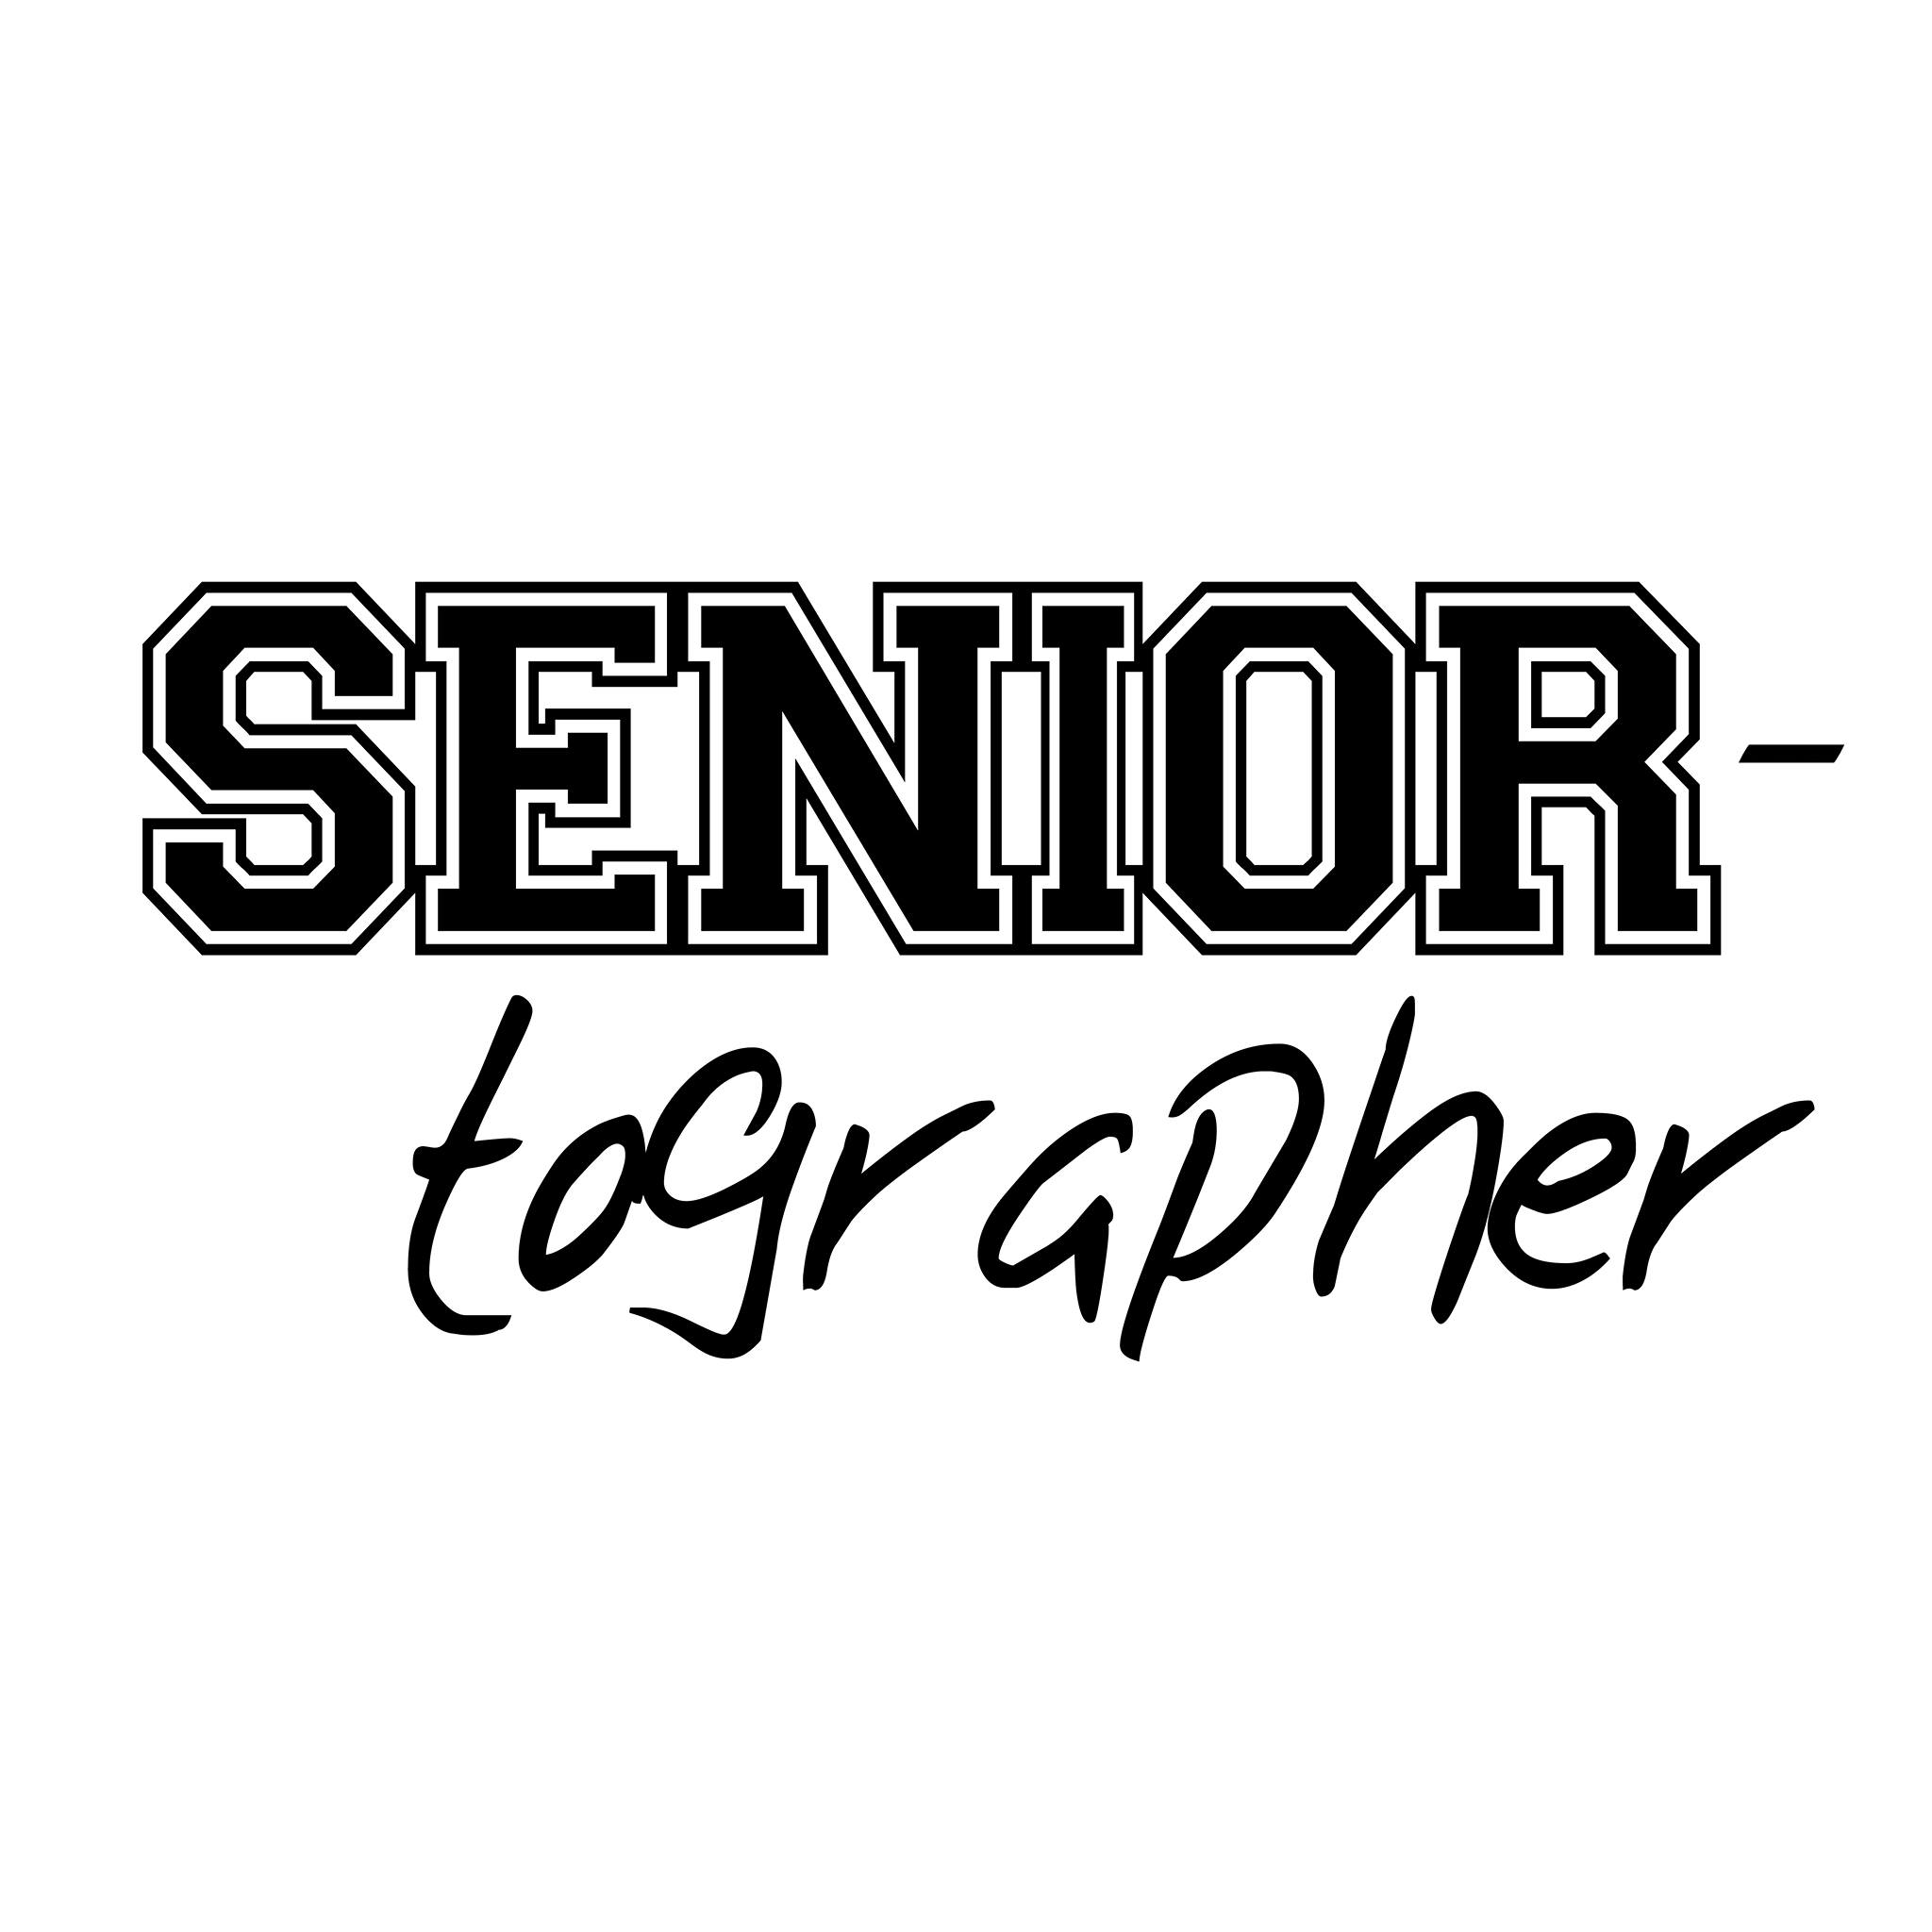 SeniorTographer.jpg